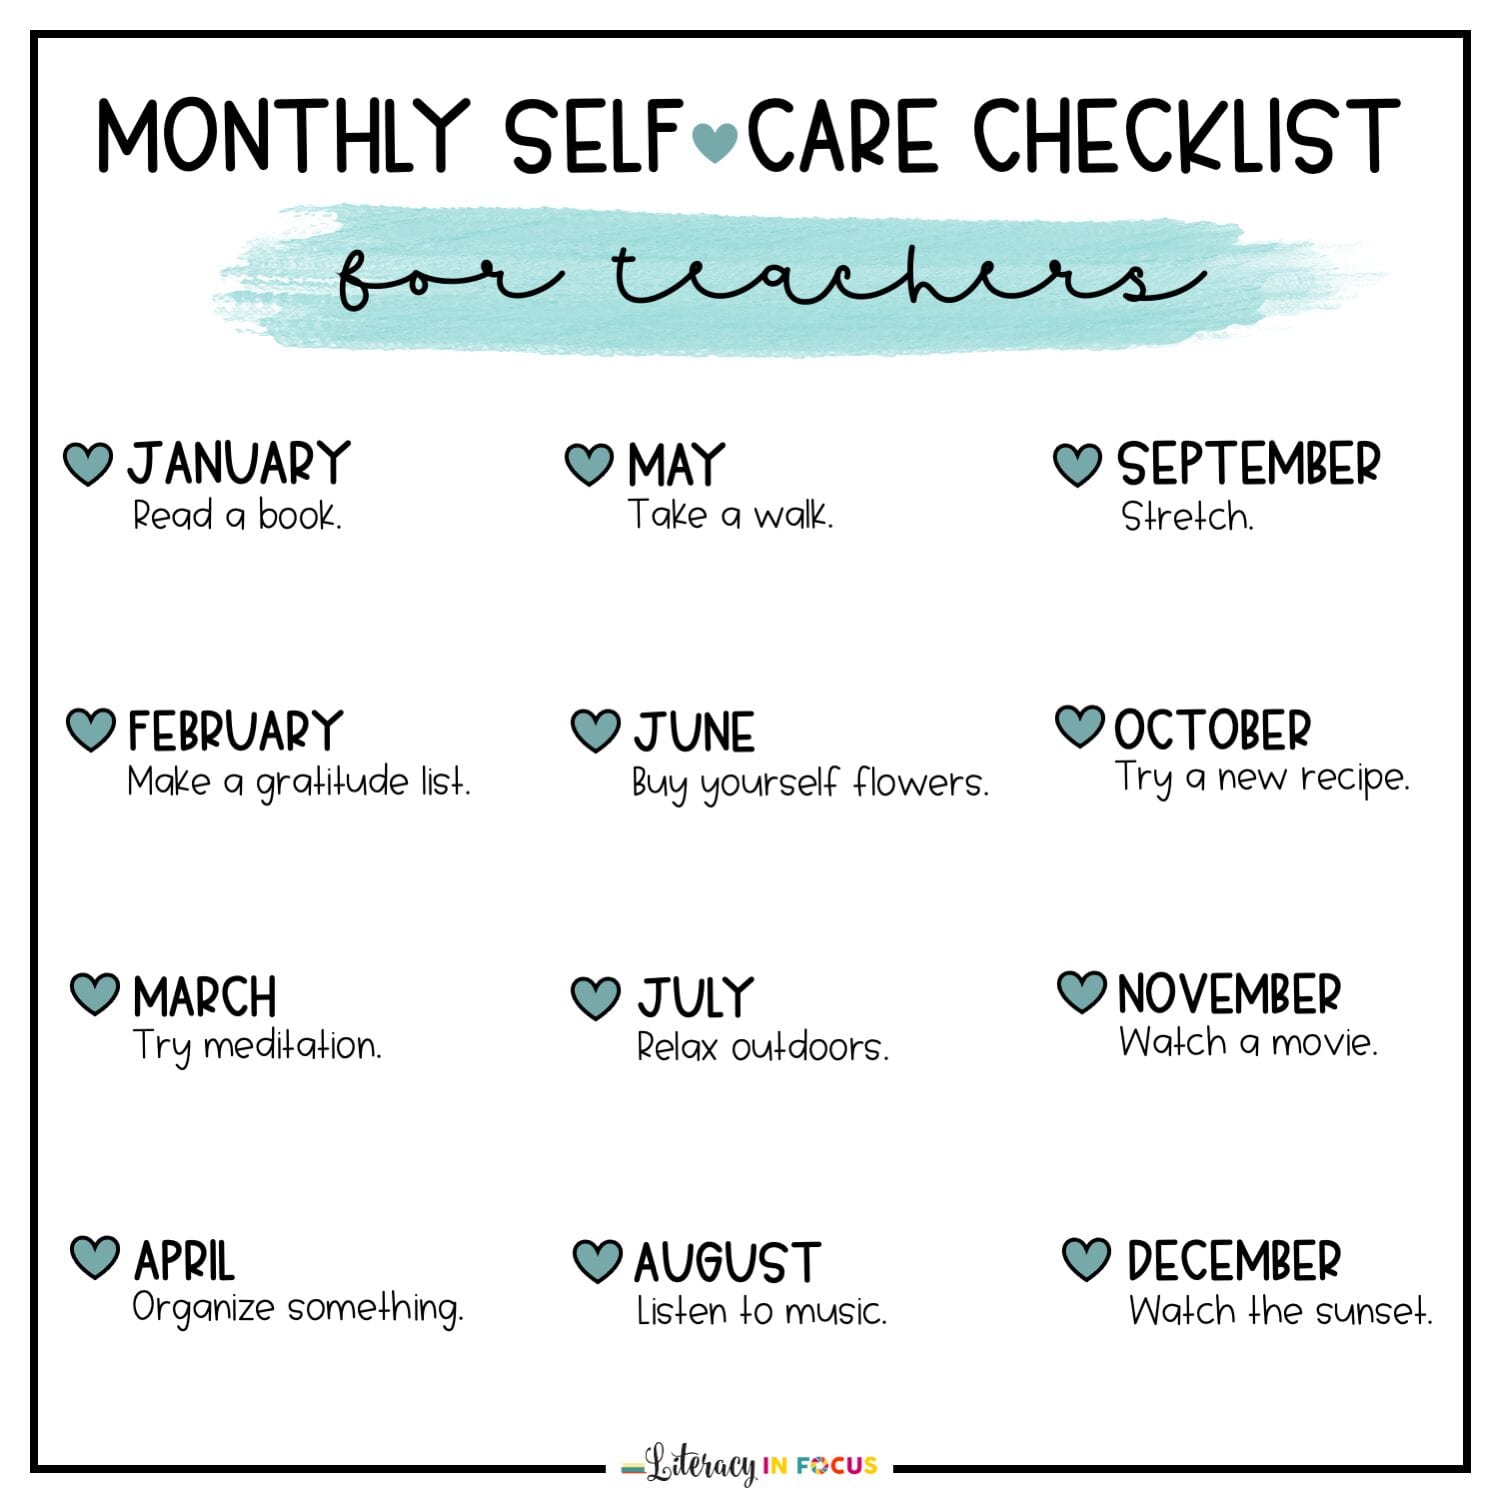 Self care checklist dfwinfo